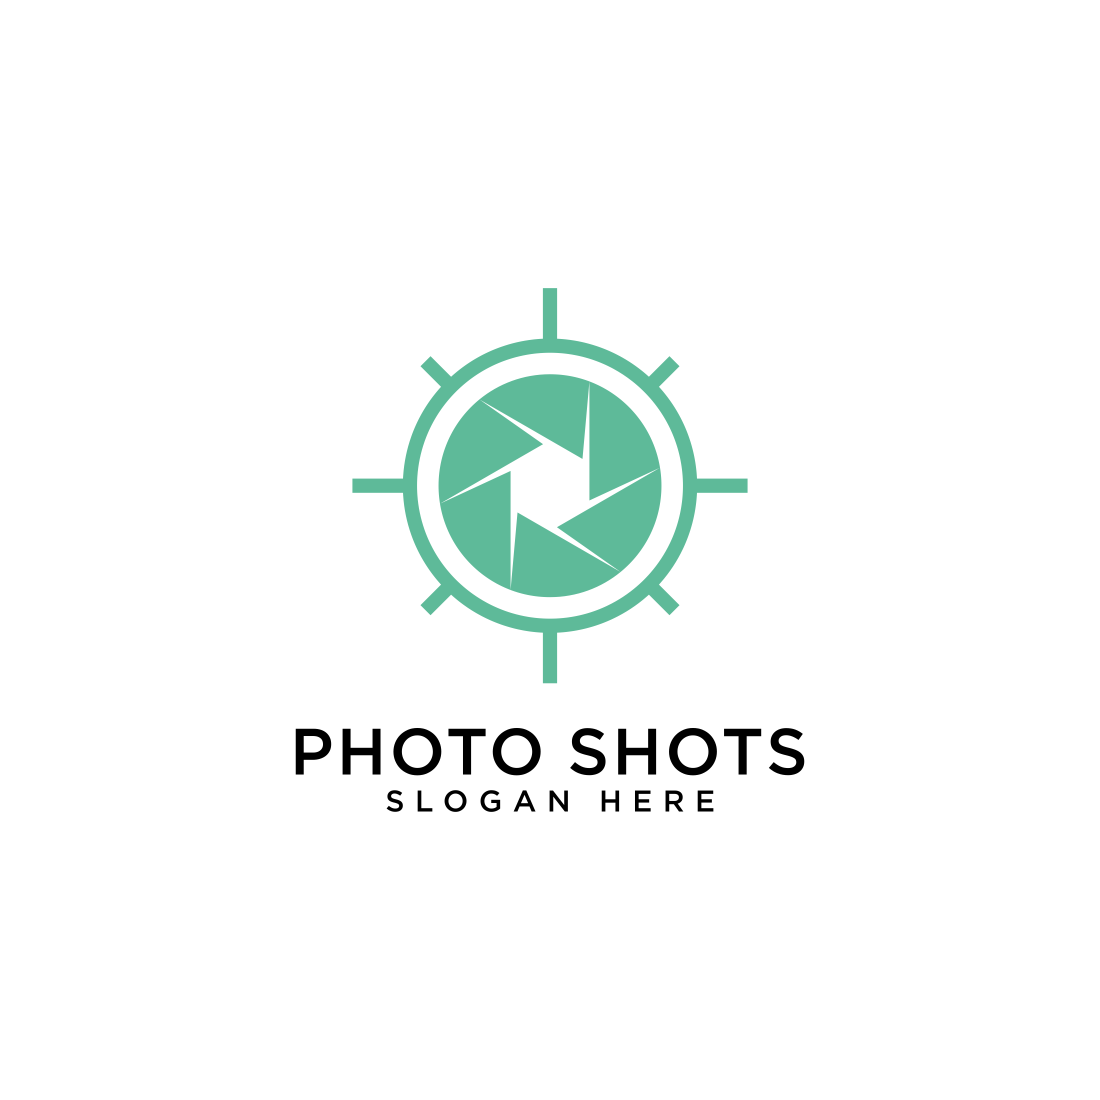 photo shots camera icon logo vector preview image.